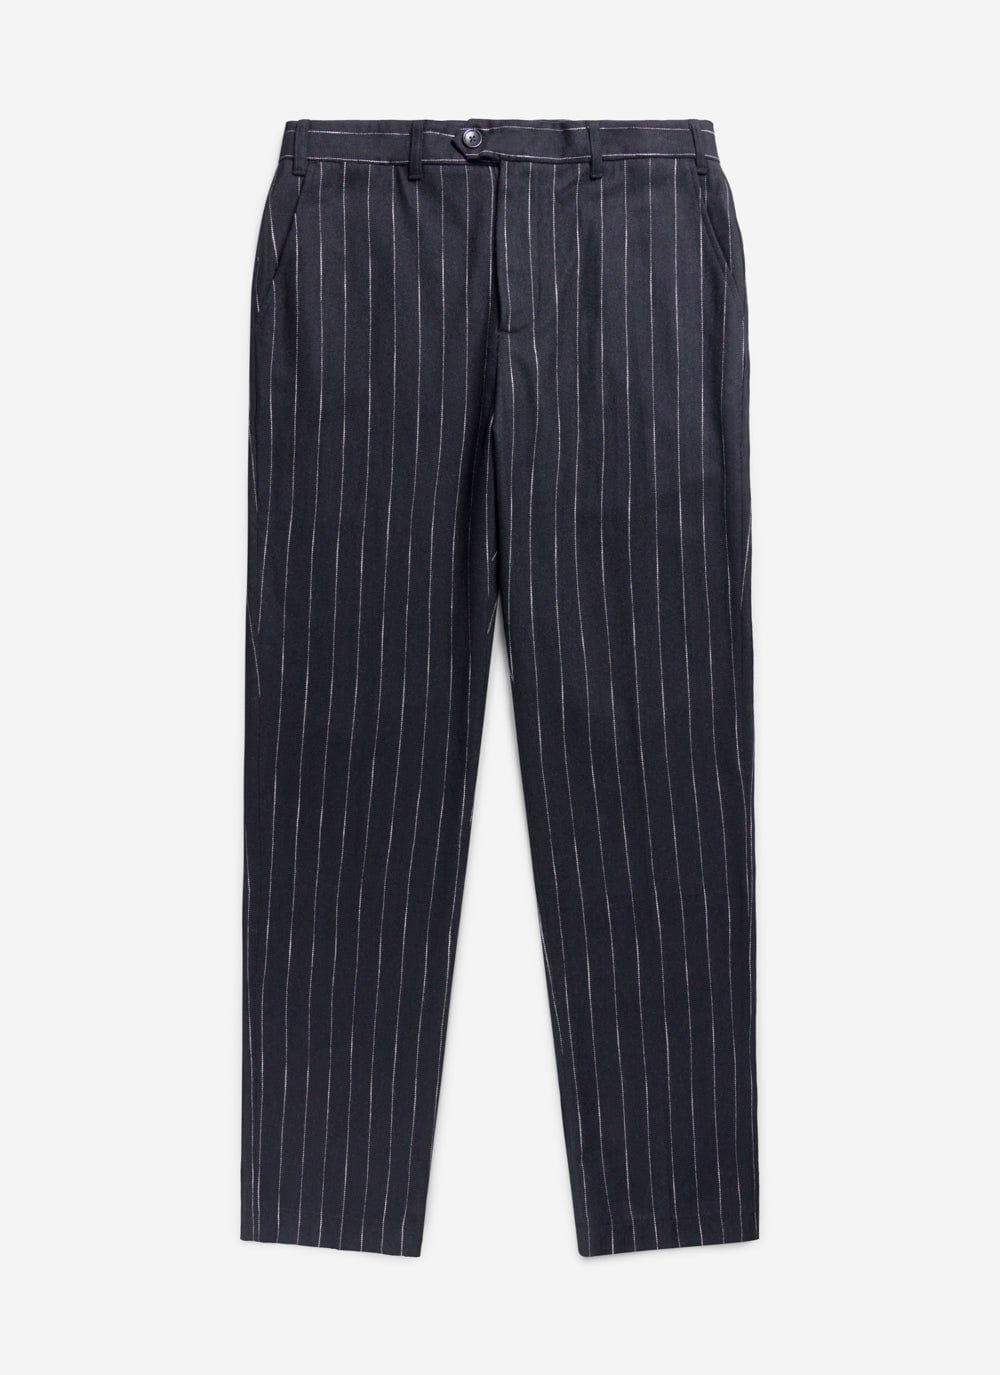 Spring Men Pants Korean Slim Fit Men Casual Ankle Length Pants Streetwear  Men High Quality Black Gray Dress Suit Pant Man Color: Stripe Black, Size:  28 | Uquid shopping cart: Online shopping